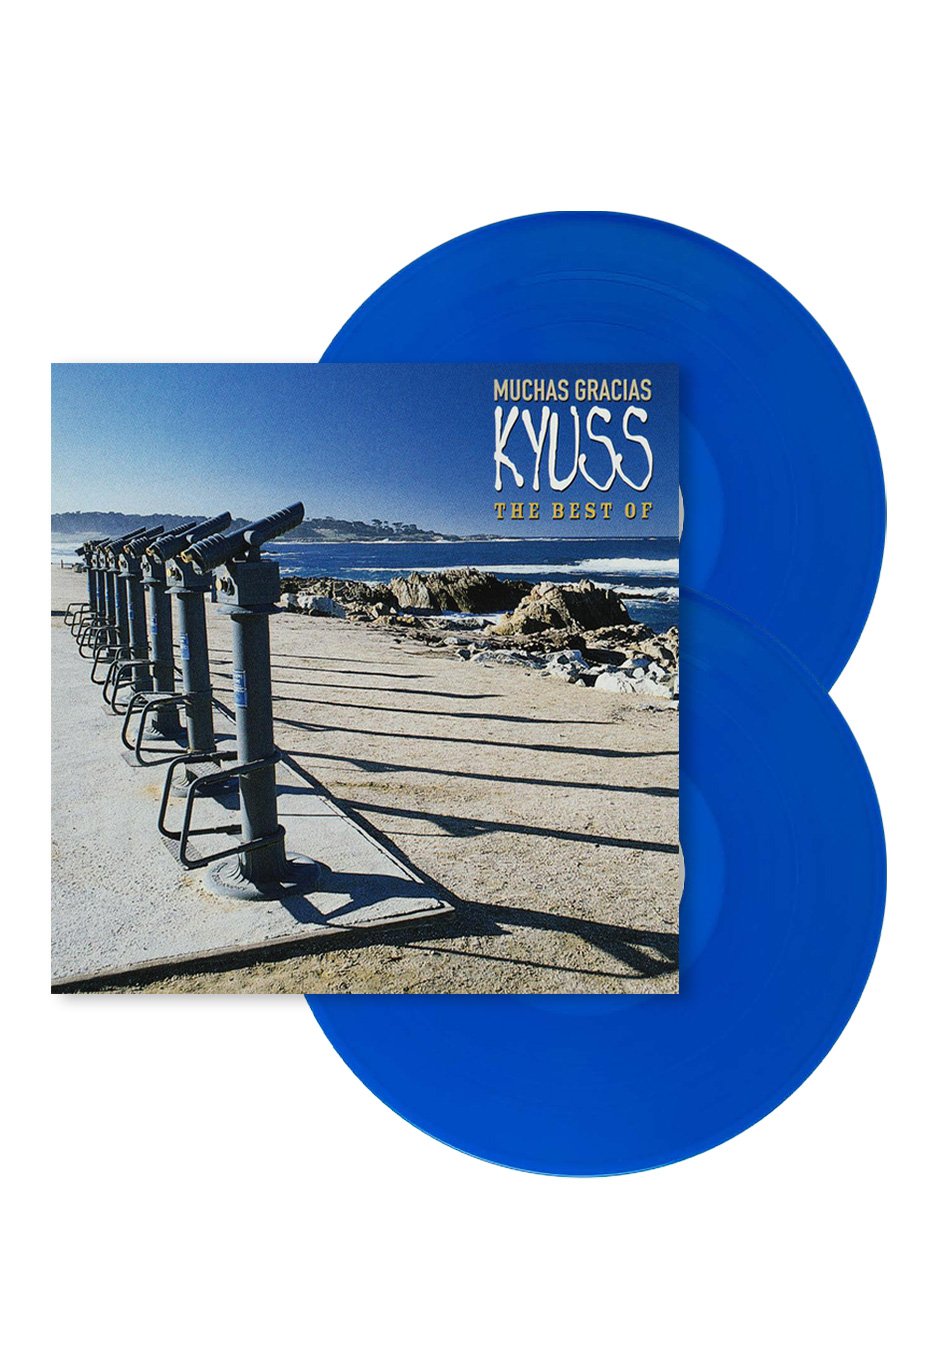 KYUSS - MUCHAS GRACIAS THE BEST OF - LTD EDITION BLUE VINYL 2LP - Wah Wah Records